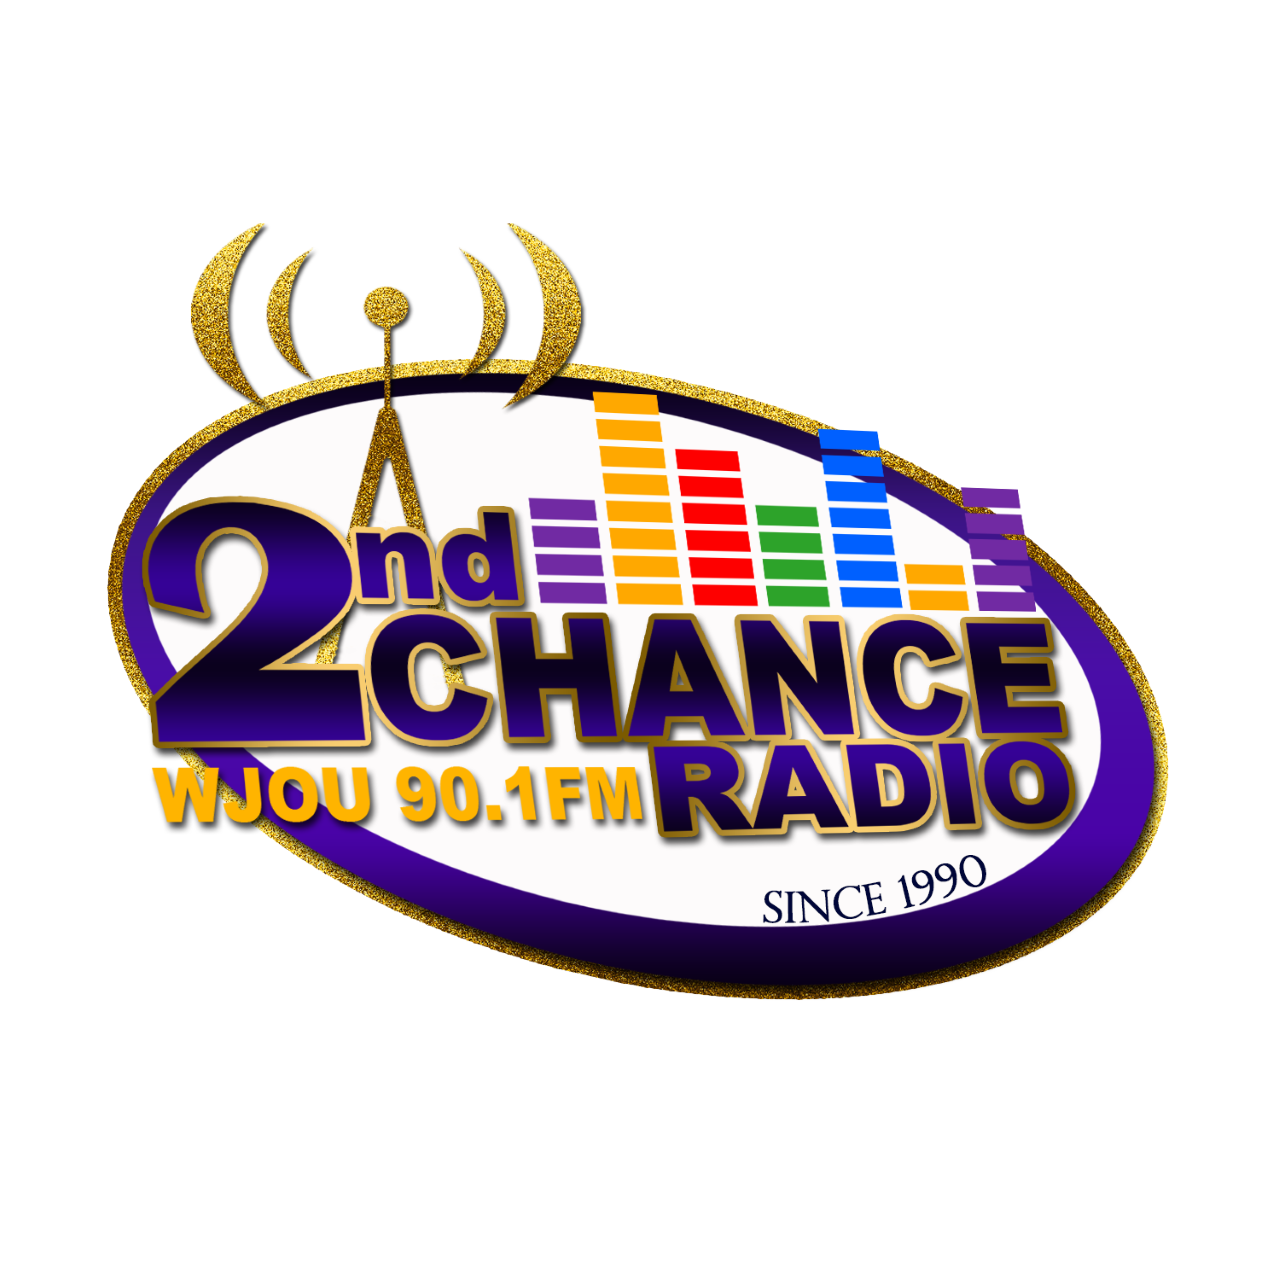 thumbnail_2nd chance radio logo r7